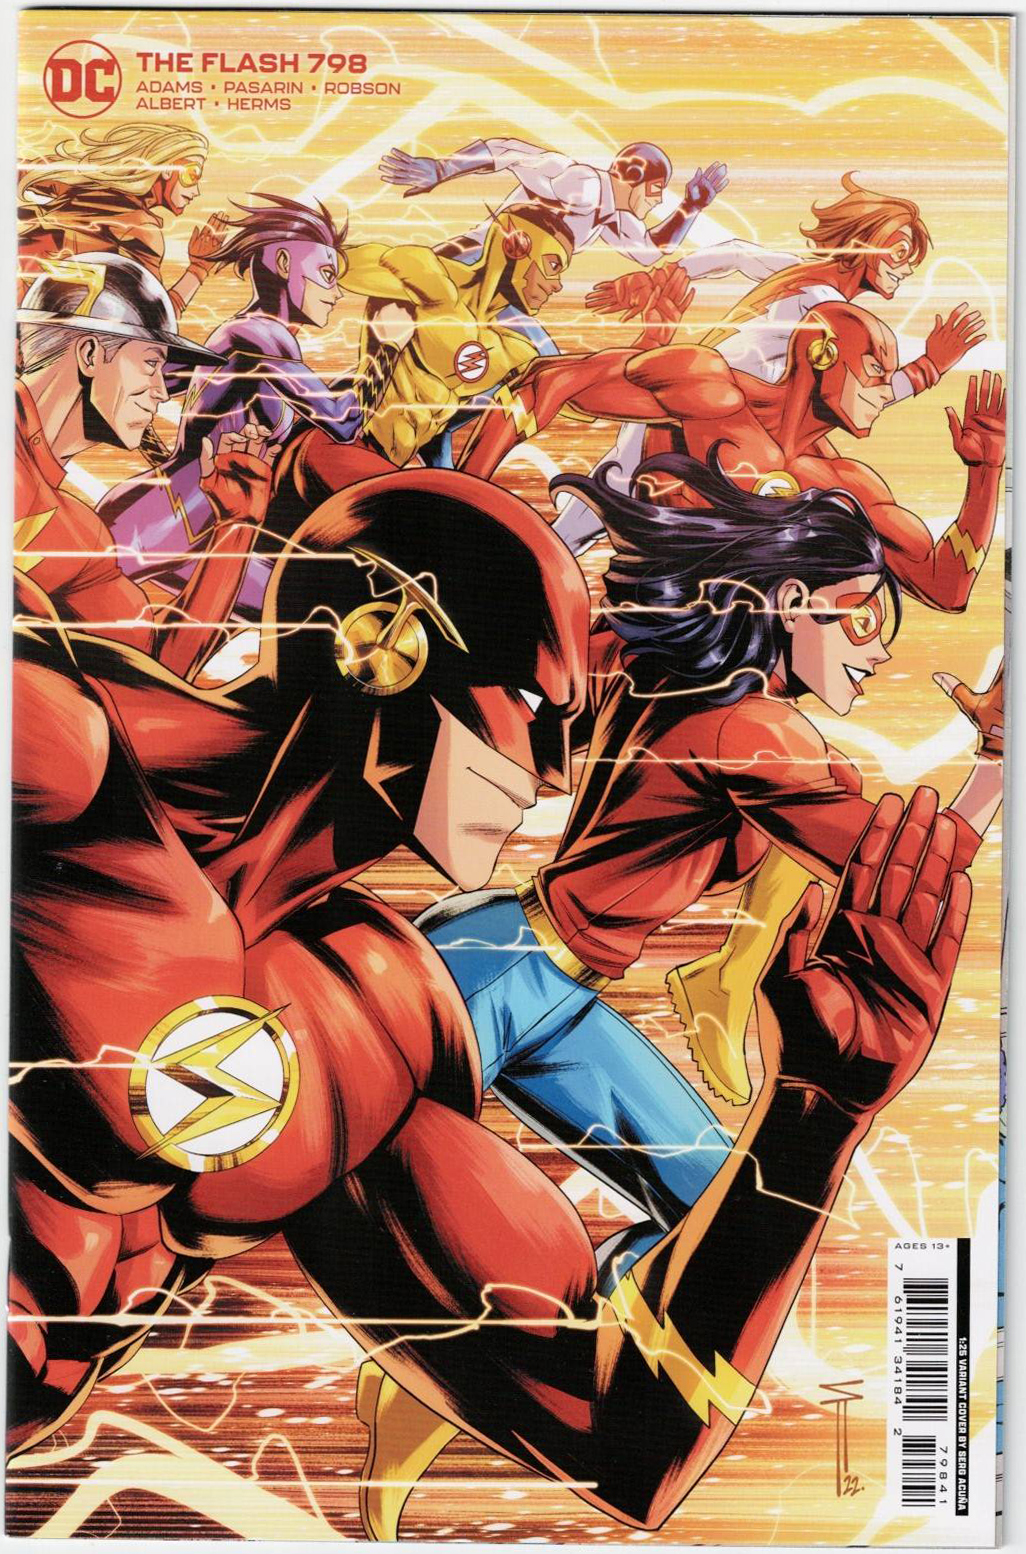 The Flash #798